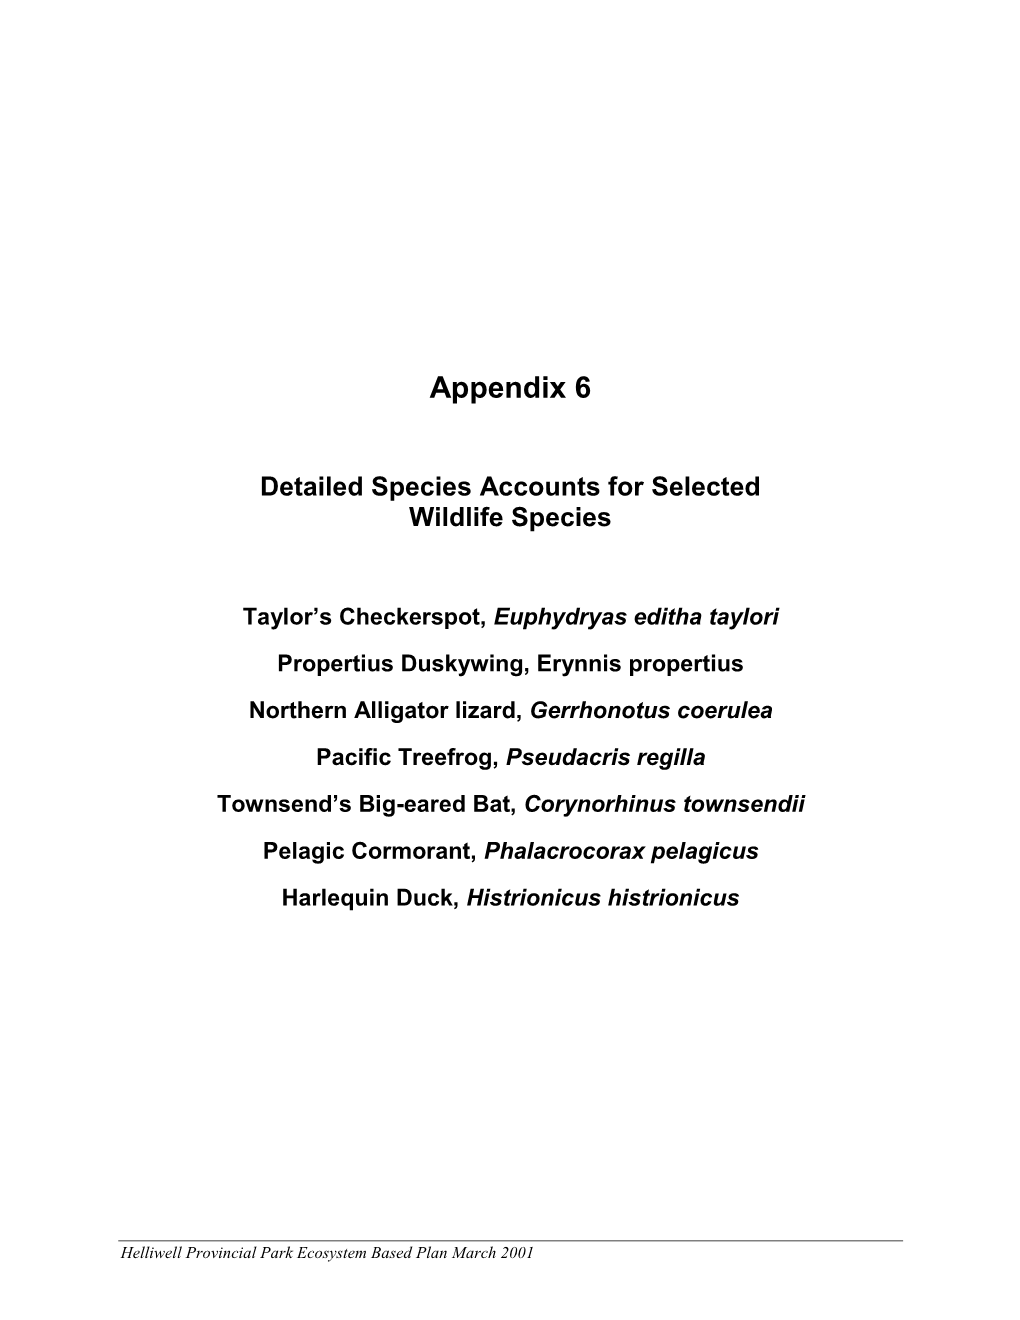 Appendix 6 Species Account for Selected Species